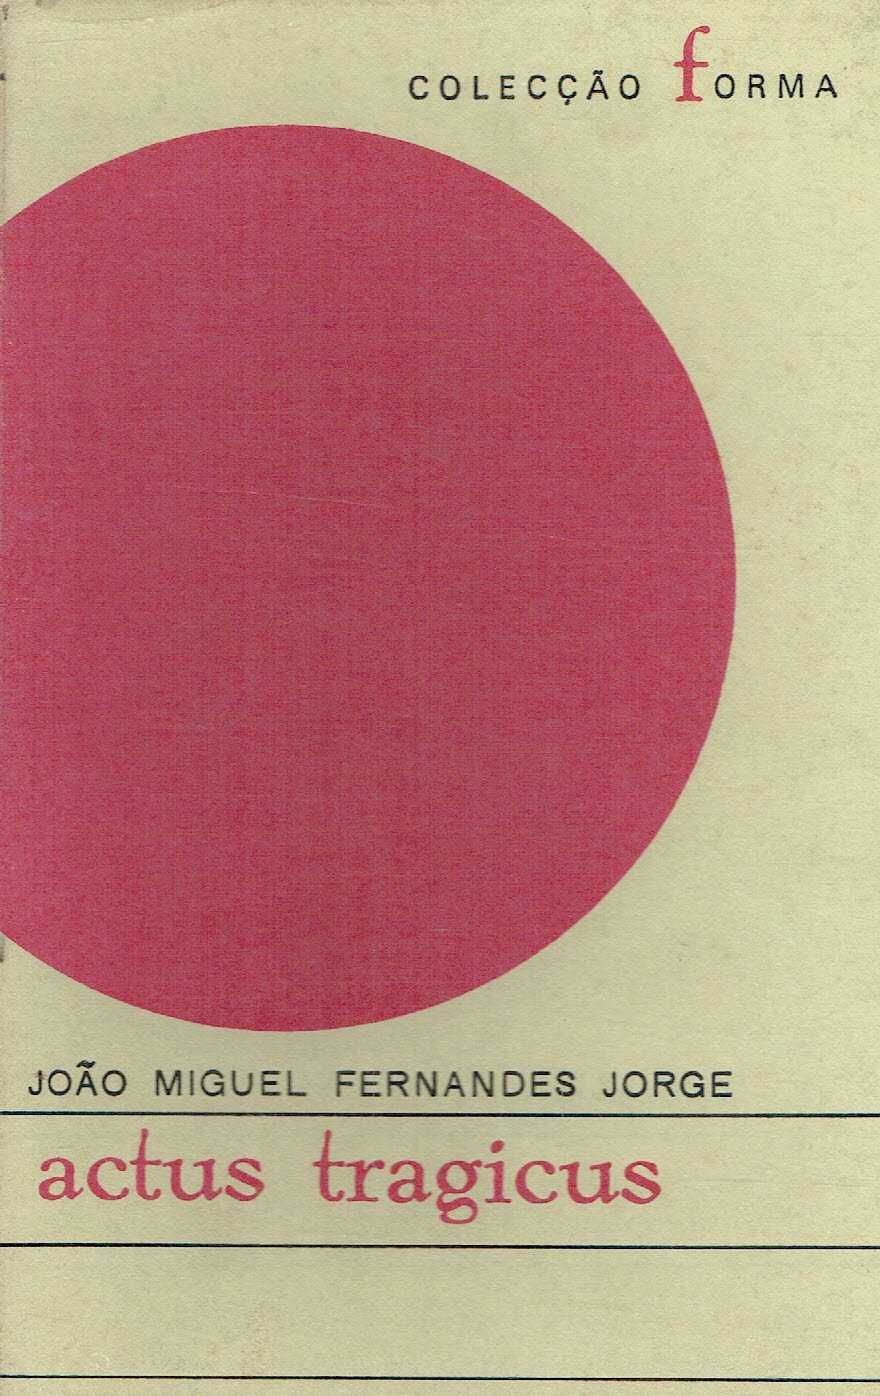 14830

Actus tragicus
de João Miguel Fernandes Jorge